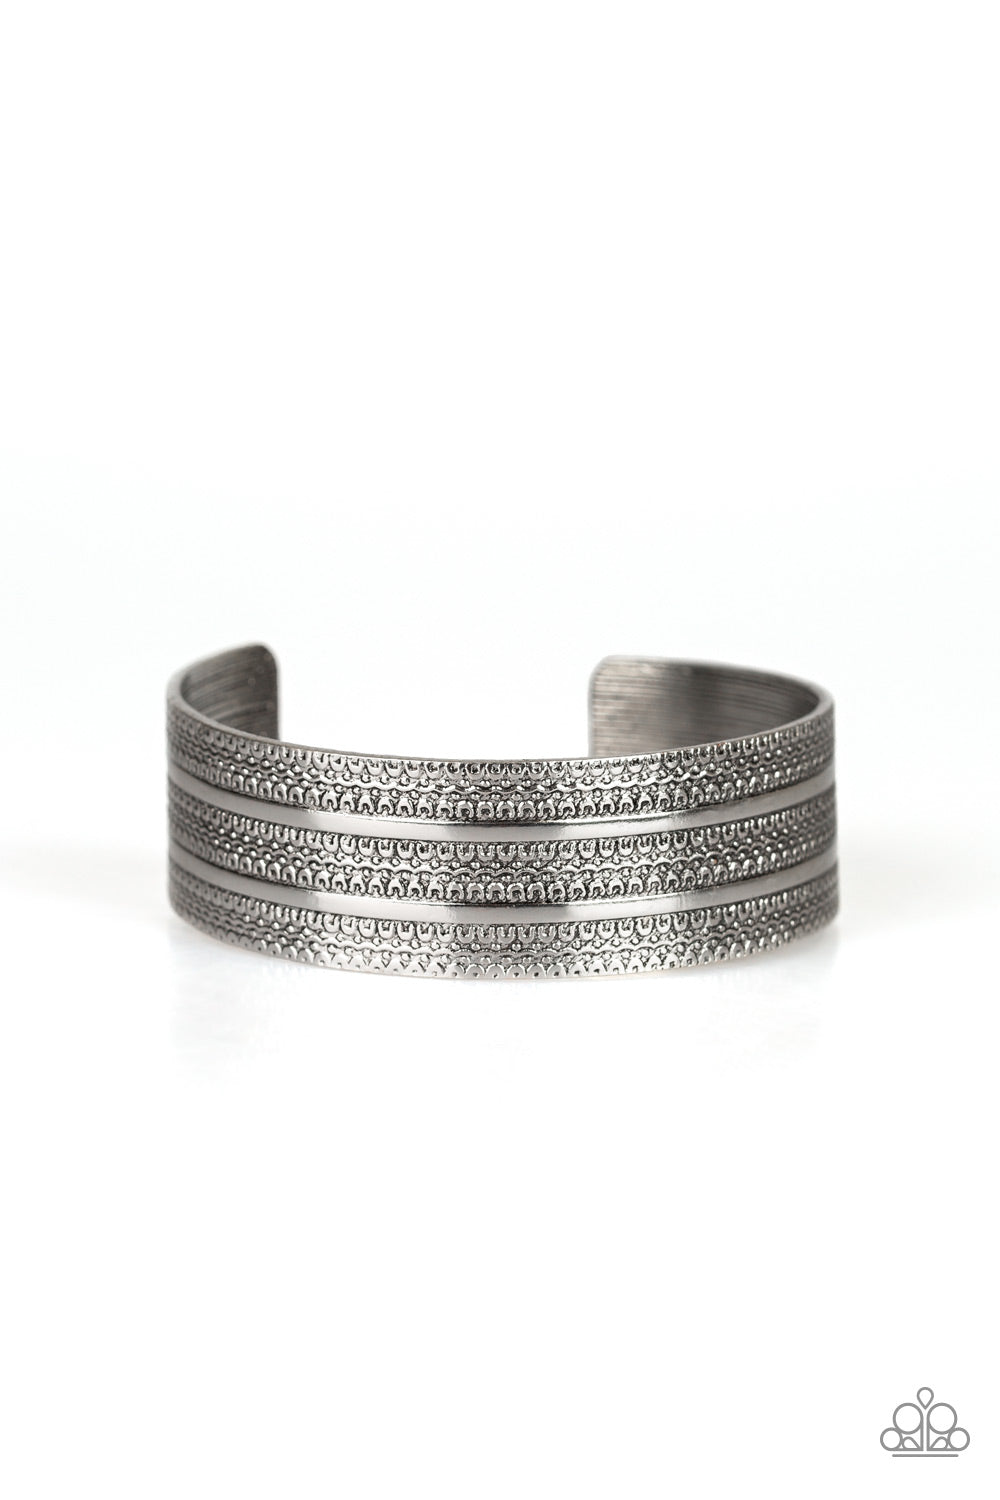 Patterned Plains - Silver Bracelet